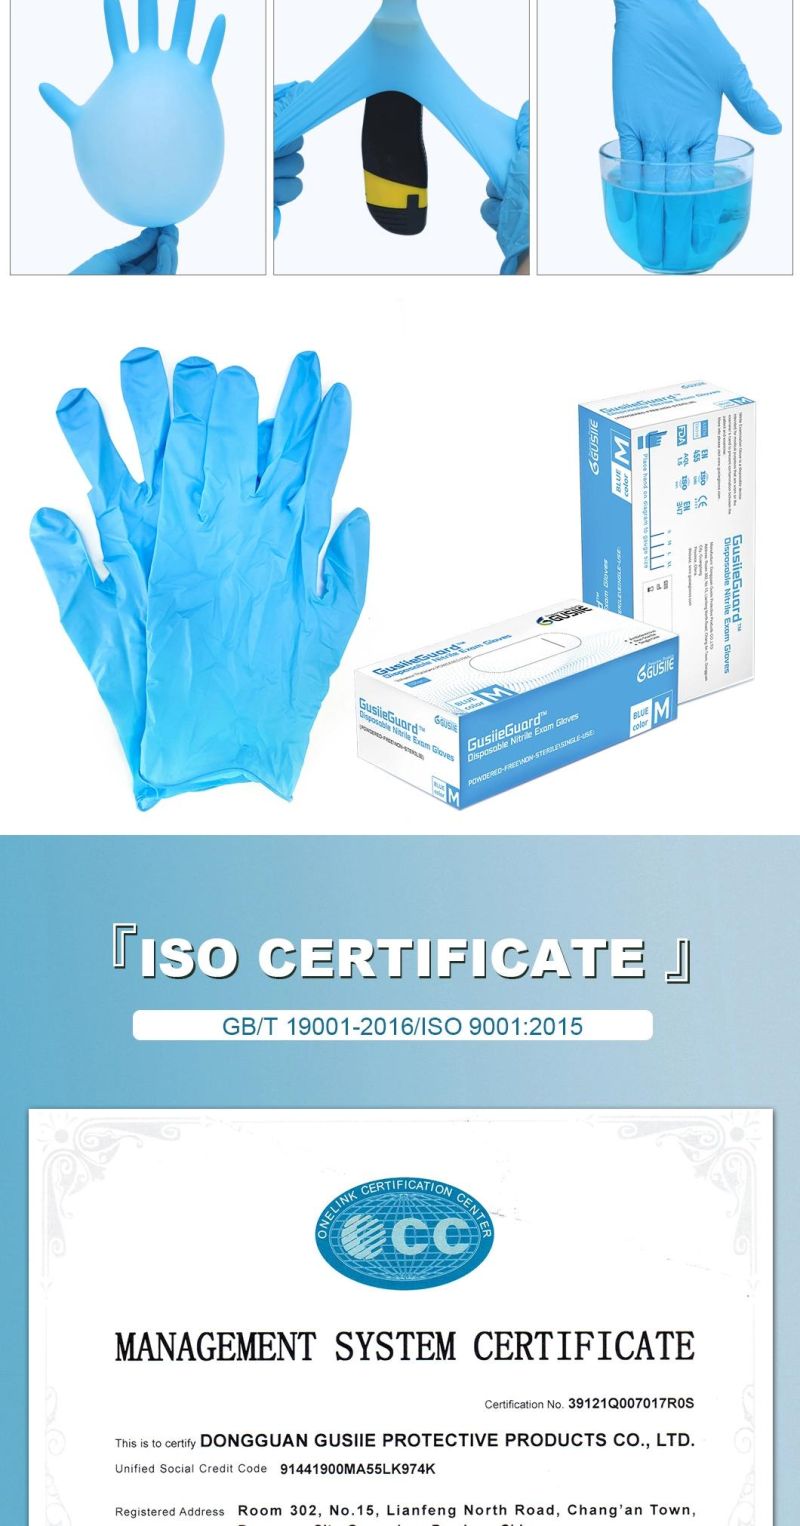 Medical Glove Disposable Nitrile Gloves Examination Gloves Powder Free